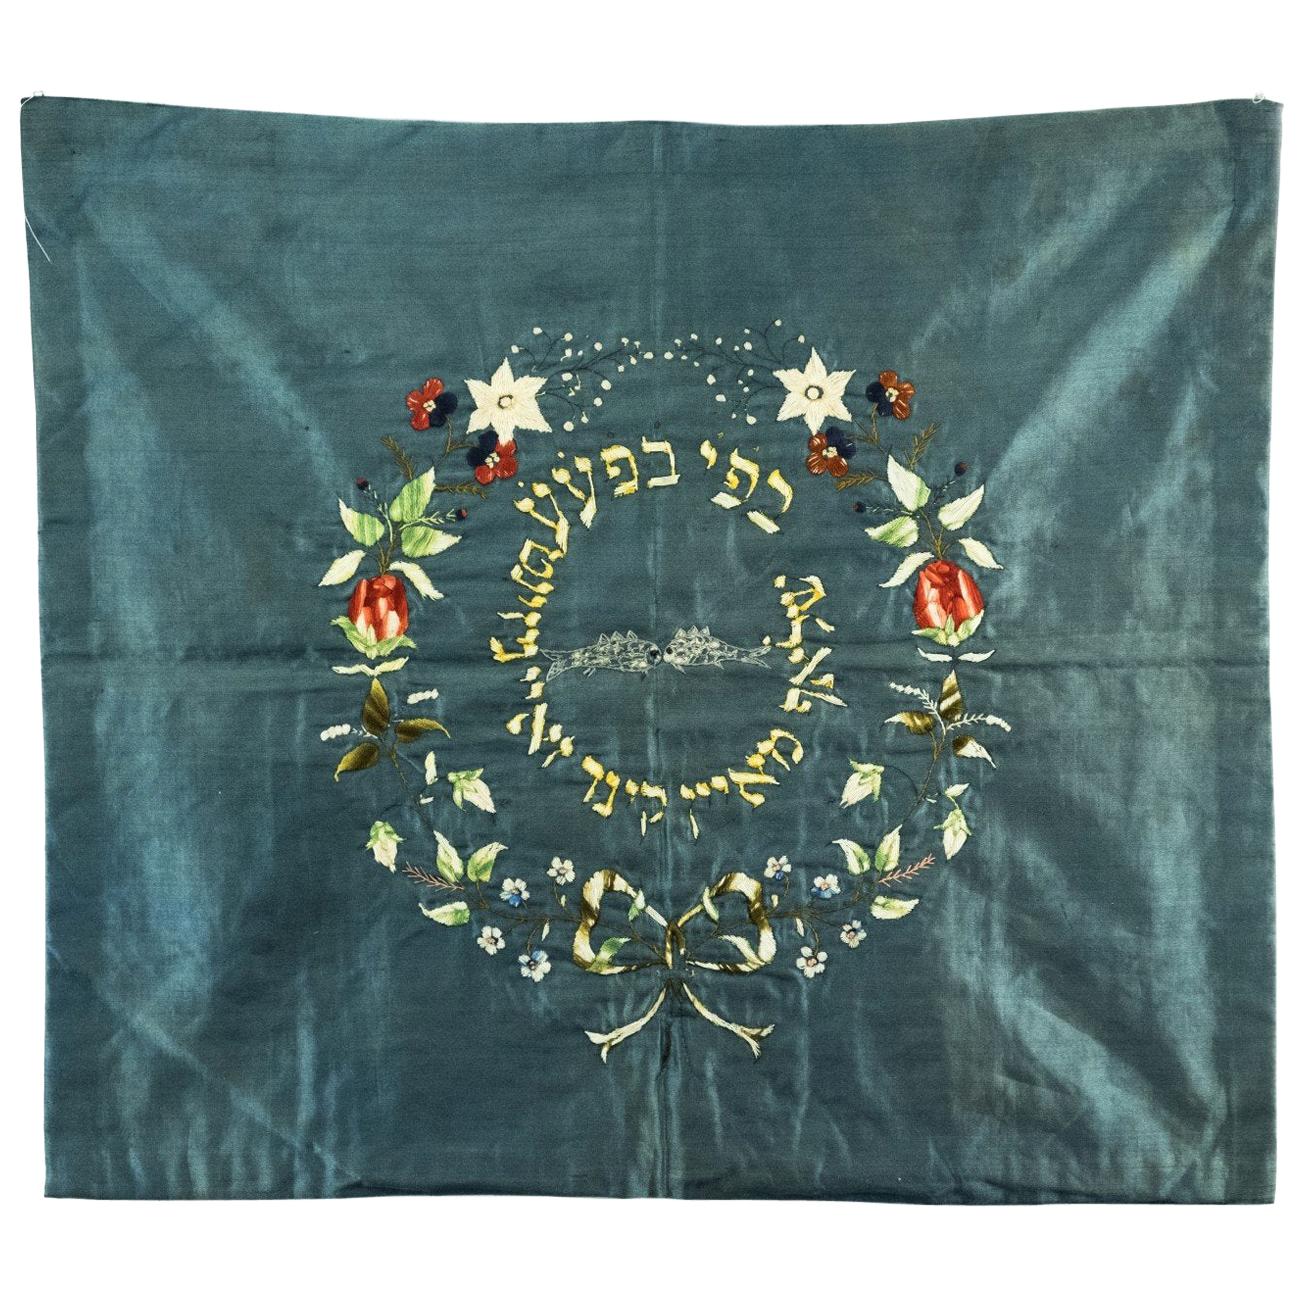 19th Century Judaic Embroidered Silk Textile